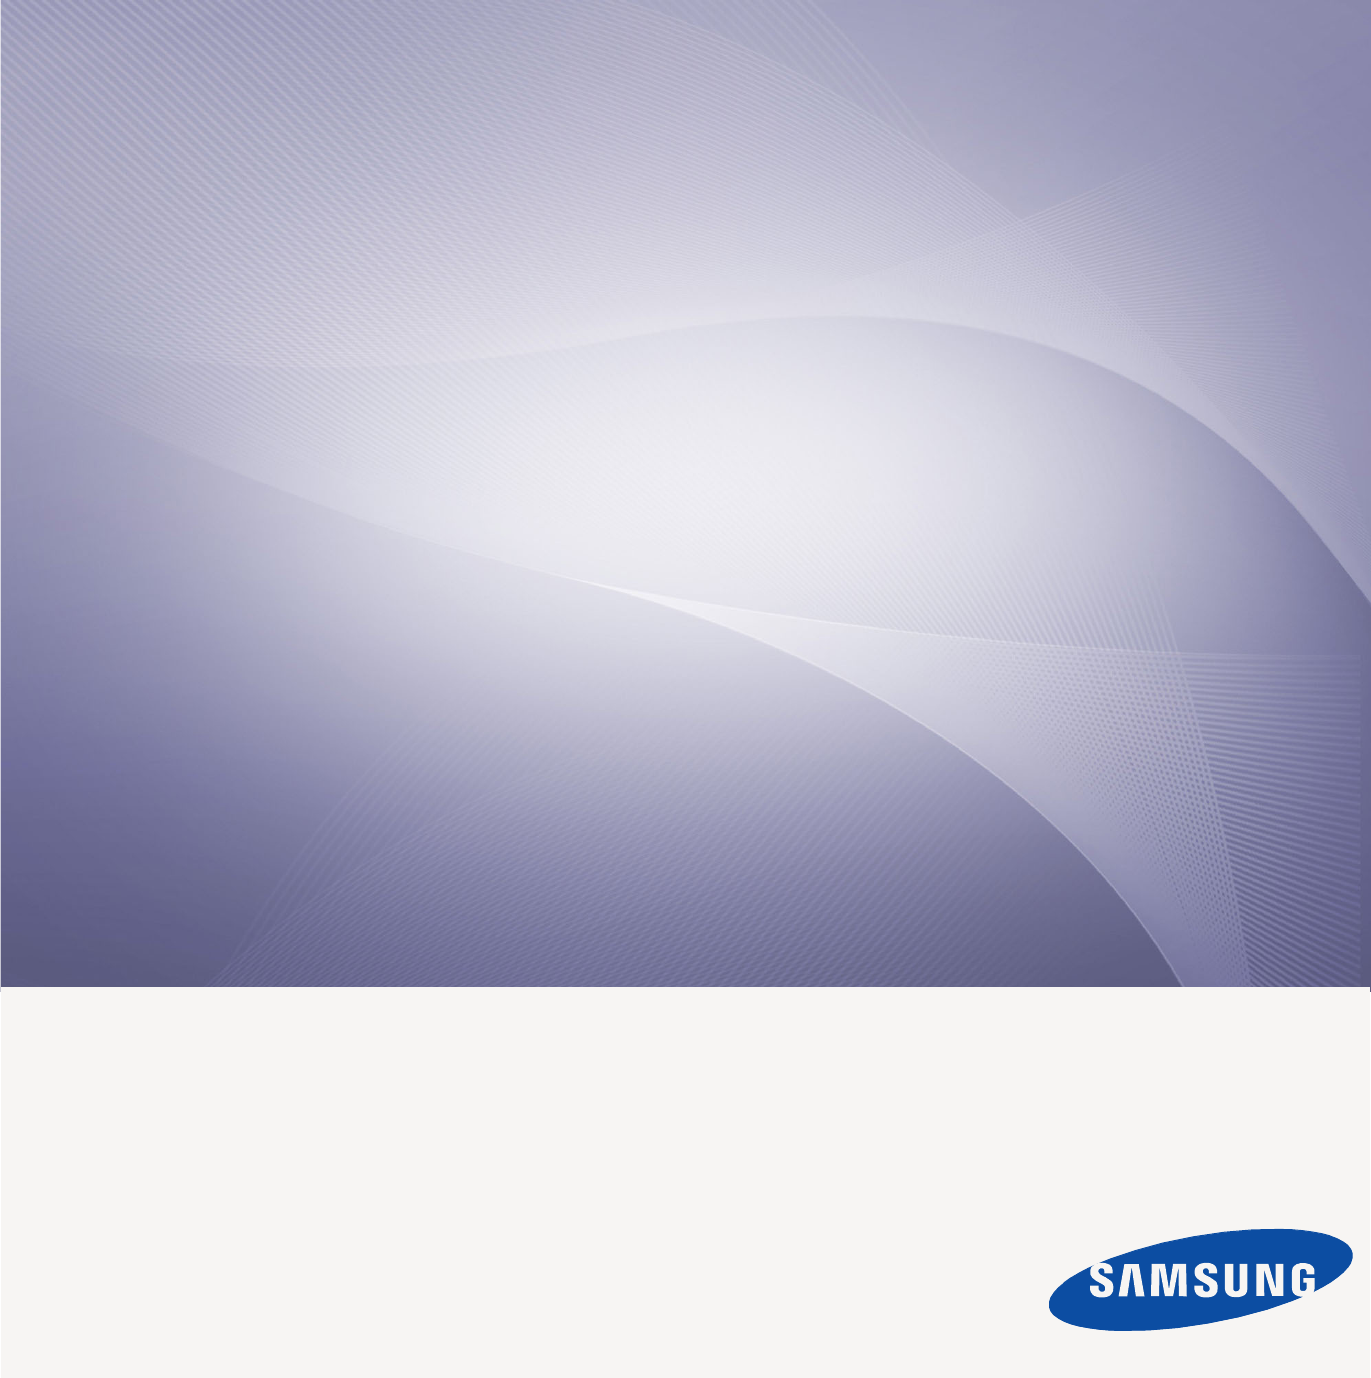 Samsung Scx4600 Scanner Driver Download